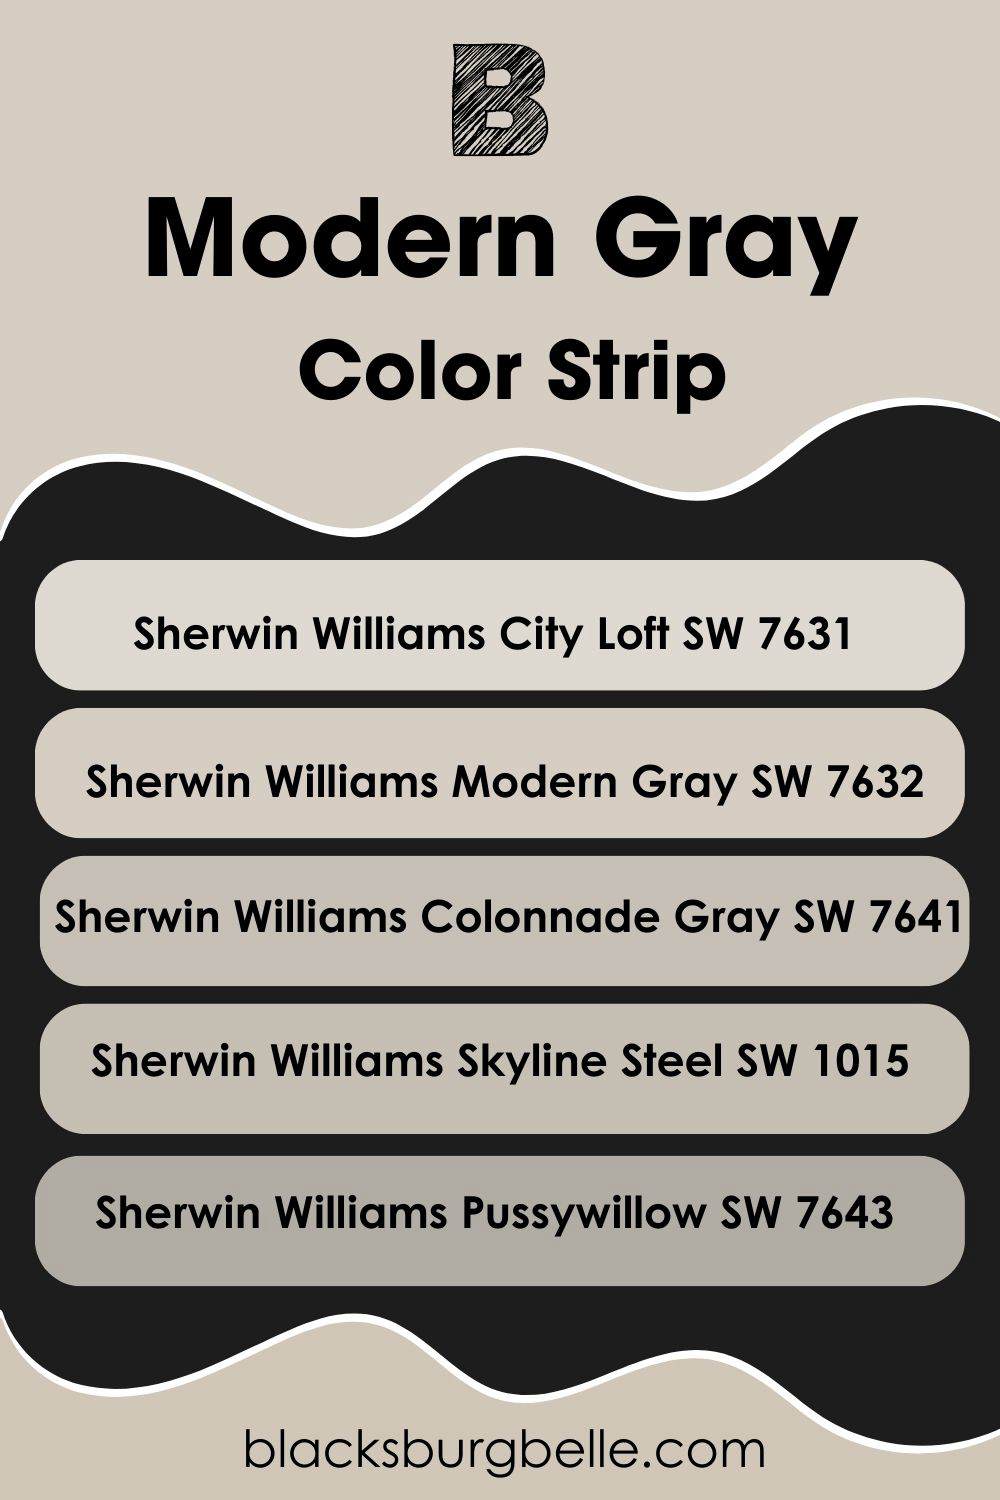 Sherwin Williams Modern Gray Color Strip